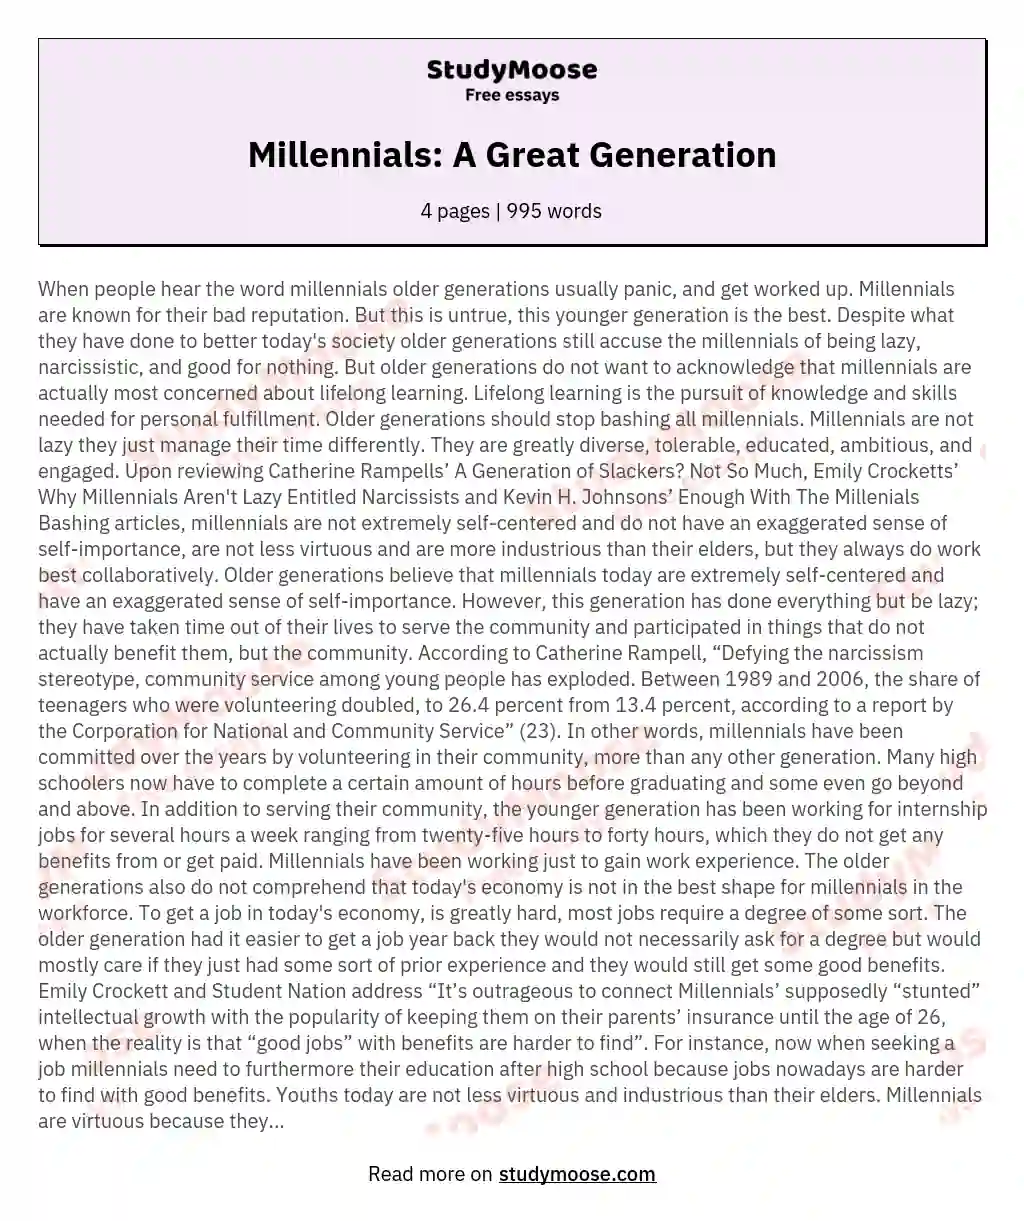 modern generation essay